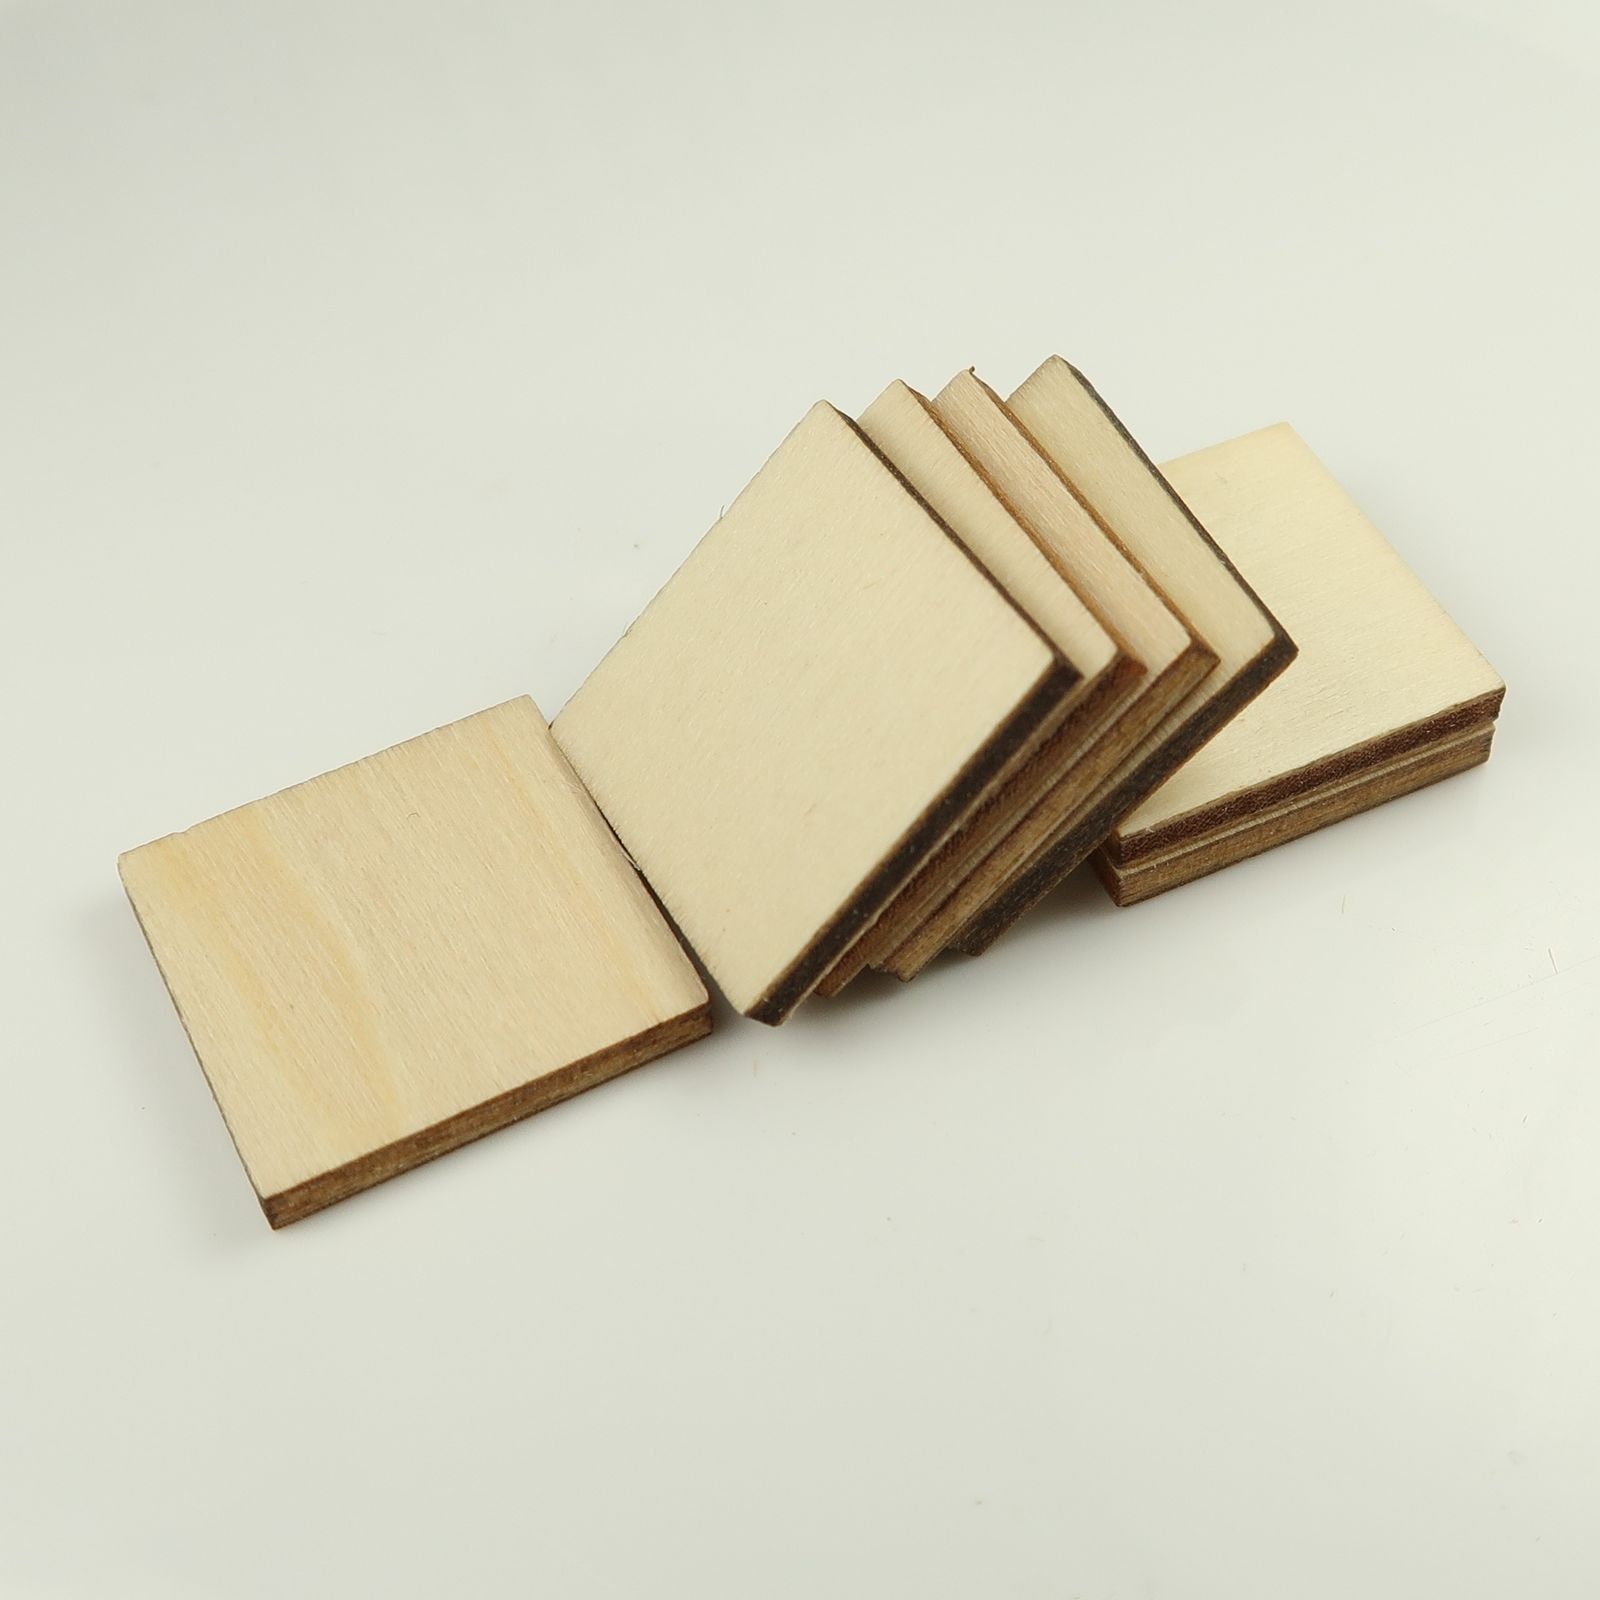 Basswood Craft Wood Sheet 300 X 100 X 3mm 11 13/16 X 4 X 1/8 Inch 